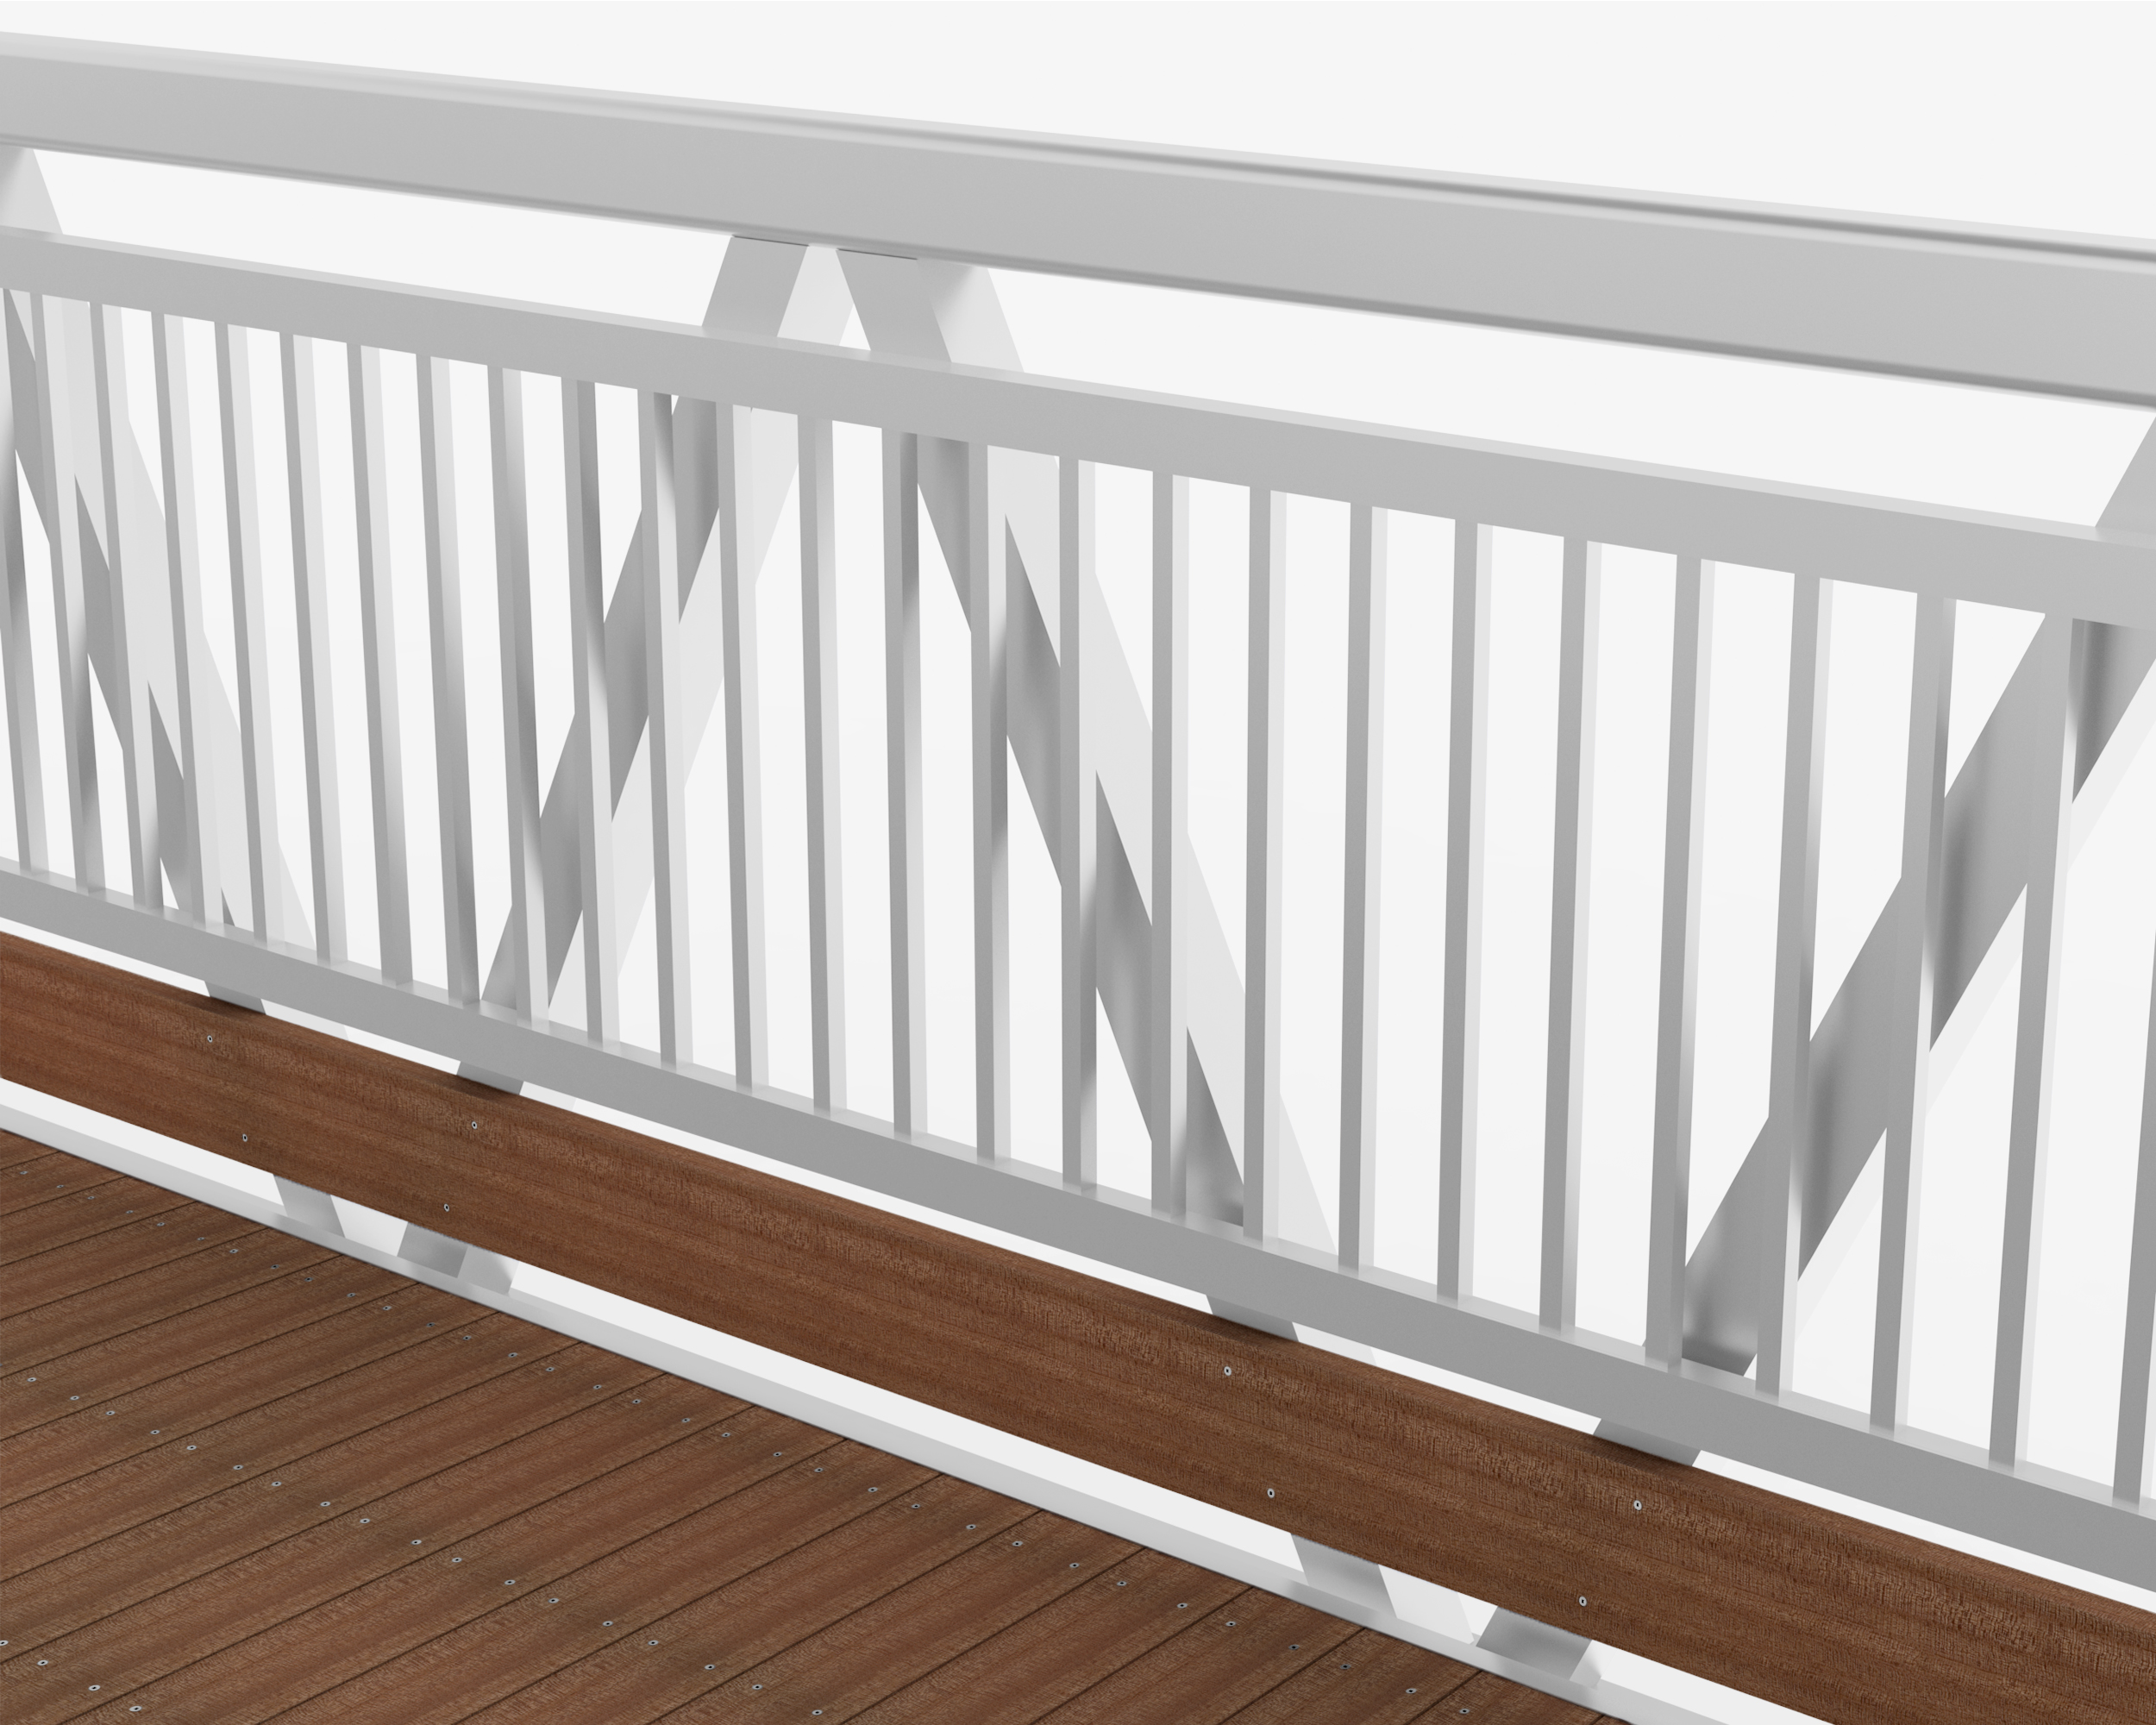 Aluminum guardrail with vertical pickets on custom pedestrian bridge